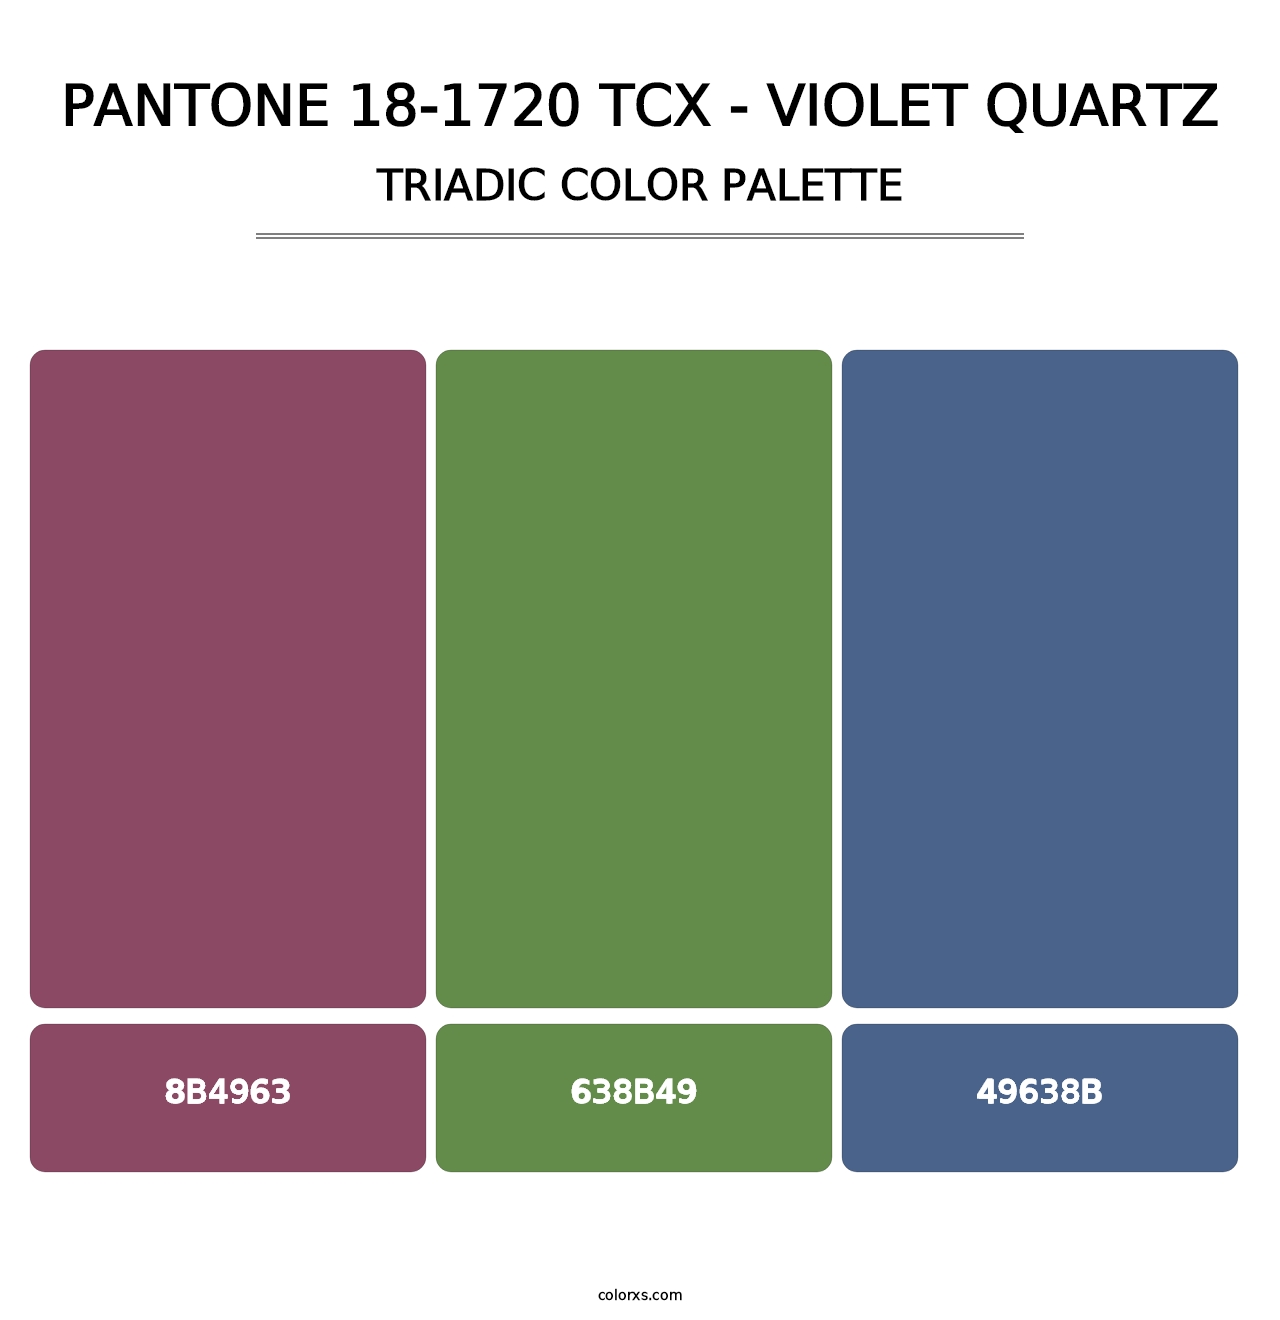 PANTONE 18-1720 TCX - Violet Quartz - Triadic Color Palette